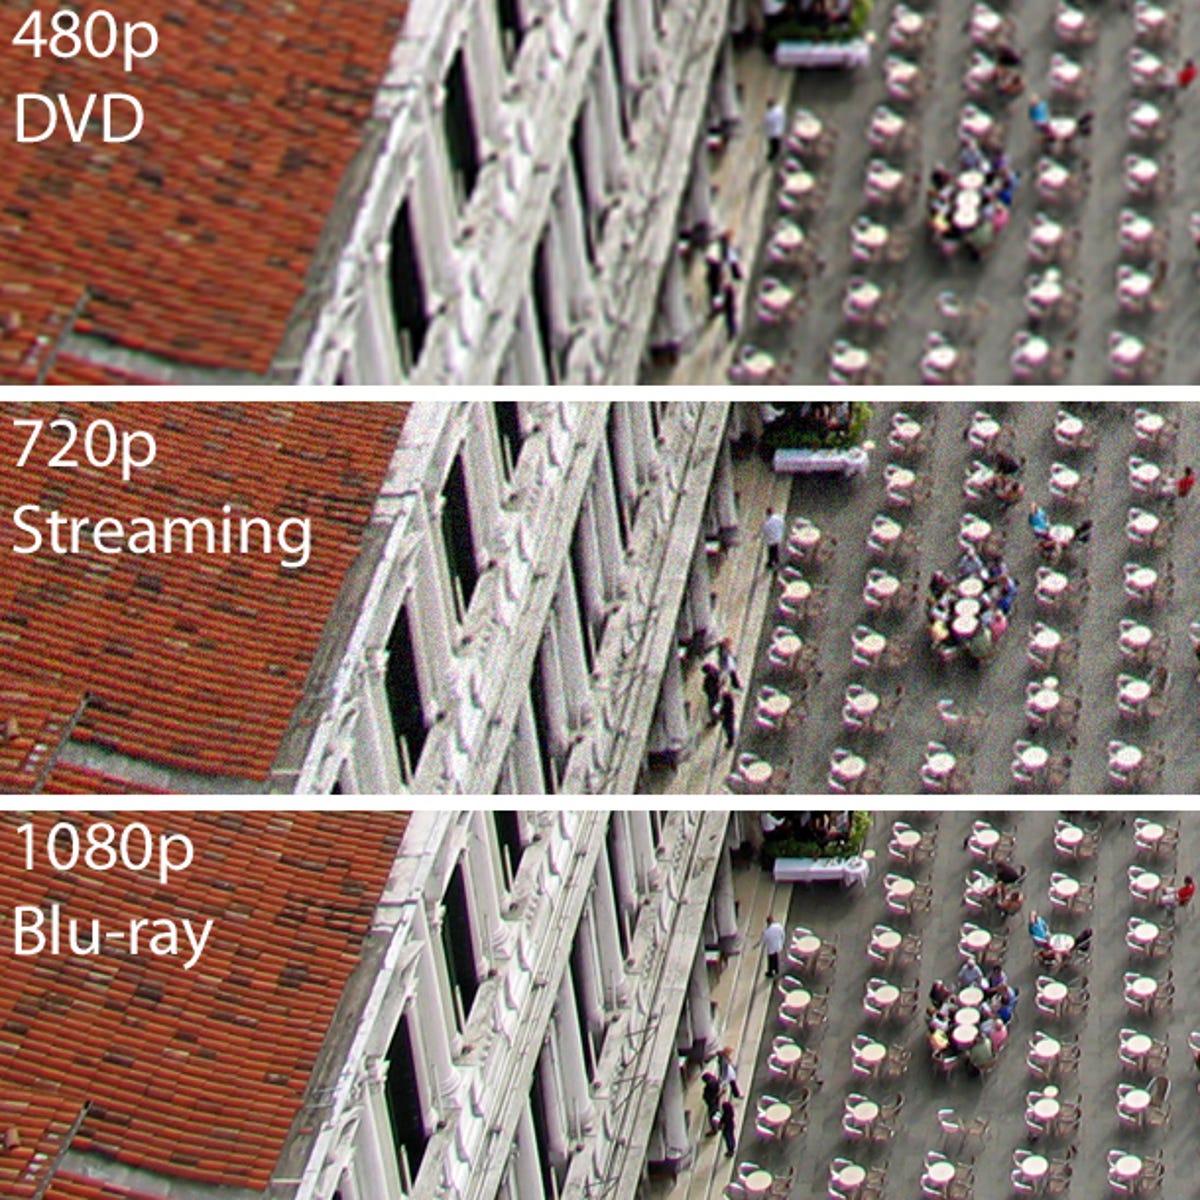 Разное качество видео. Сравнение 720 и 1080. 720 И 1080 разница. Разрешения снимков.